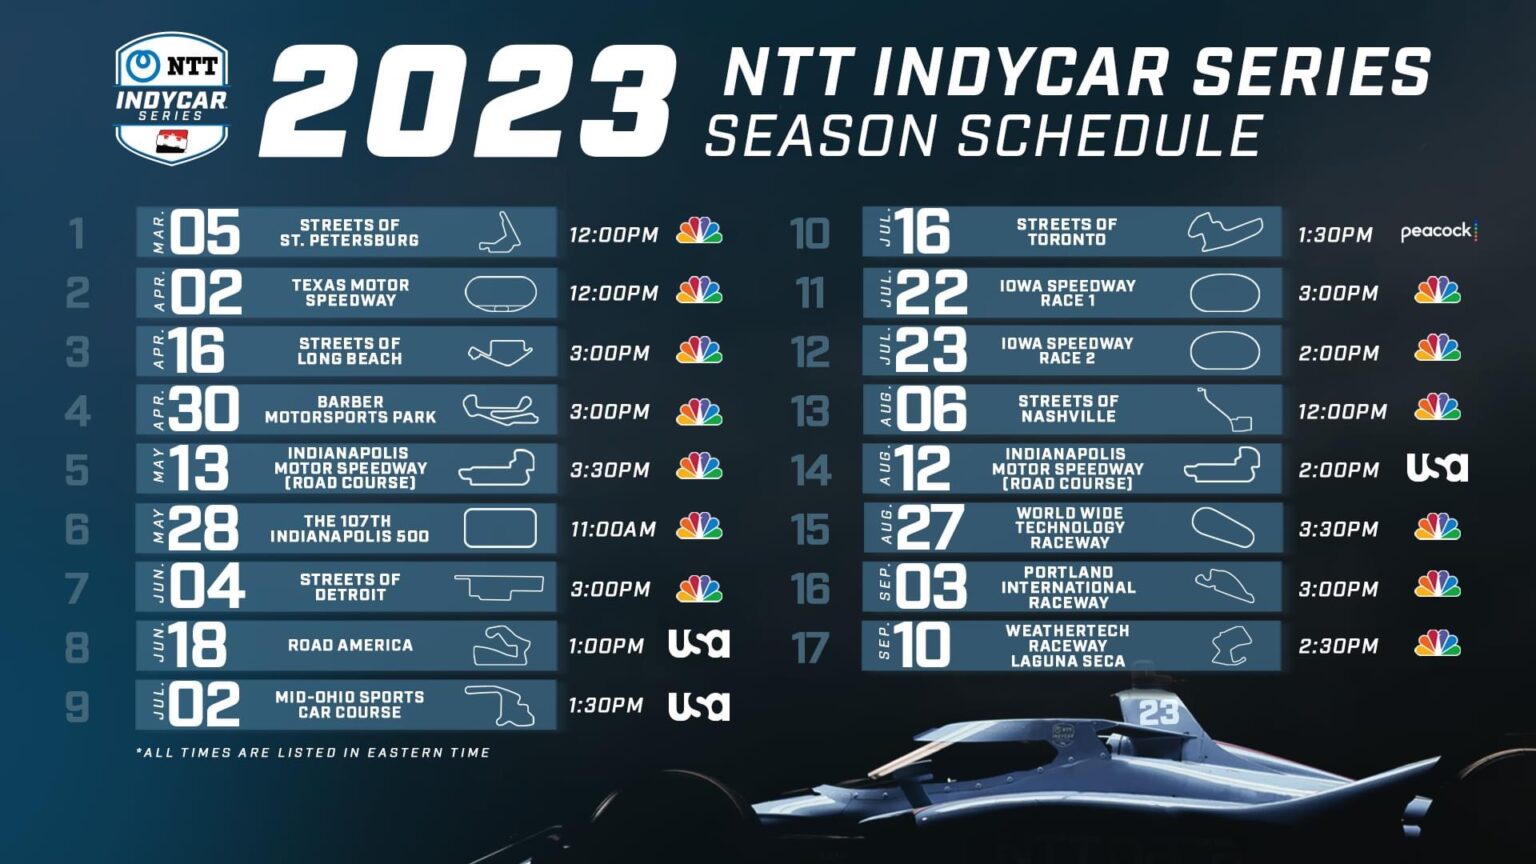 2023 NTT INDYCAR SERIES NBC Sports Schedule Released